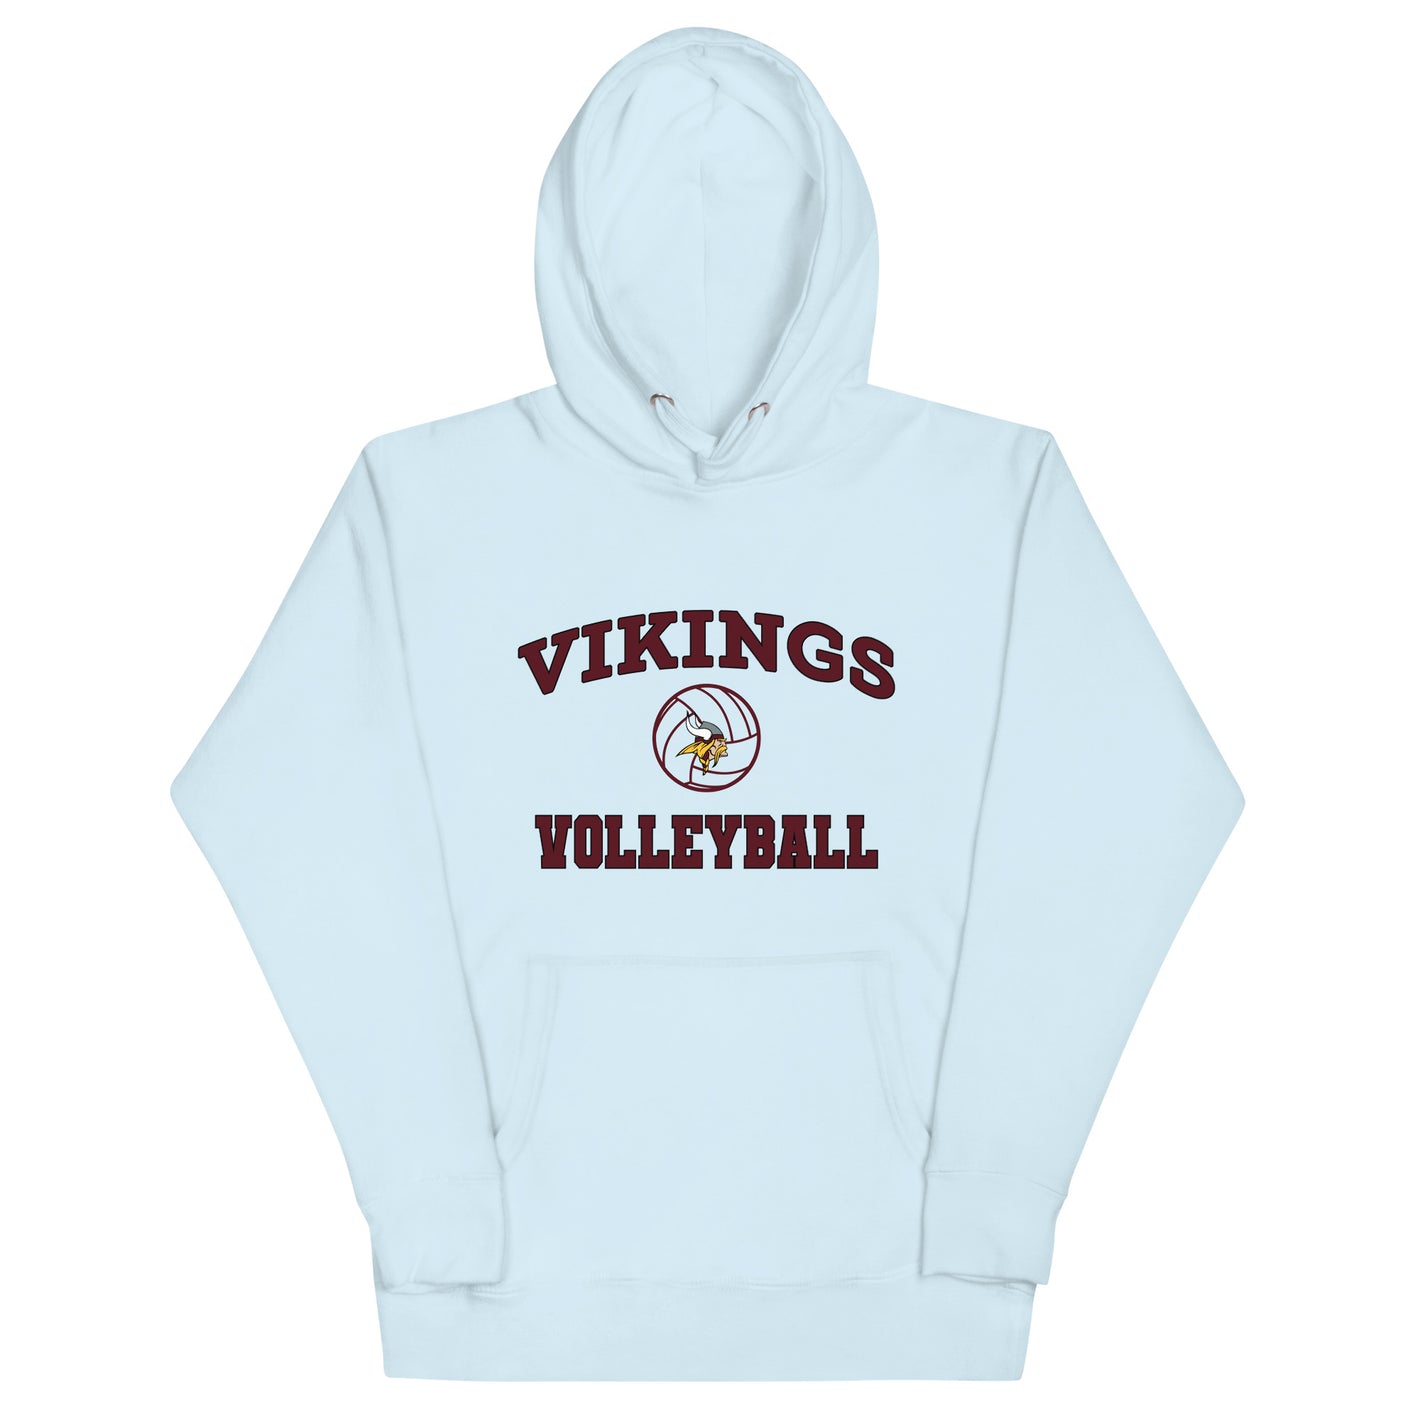 Viking Volleyball Unisex Hoodie